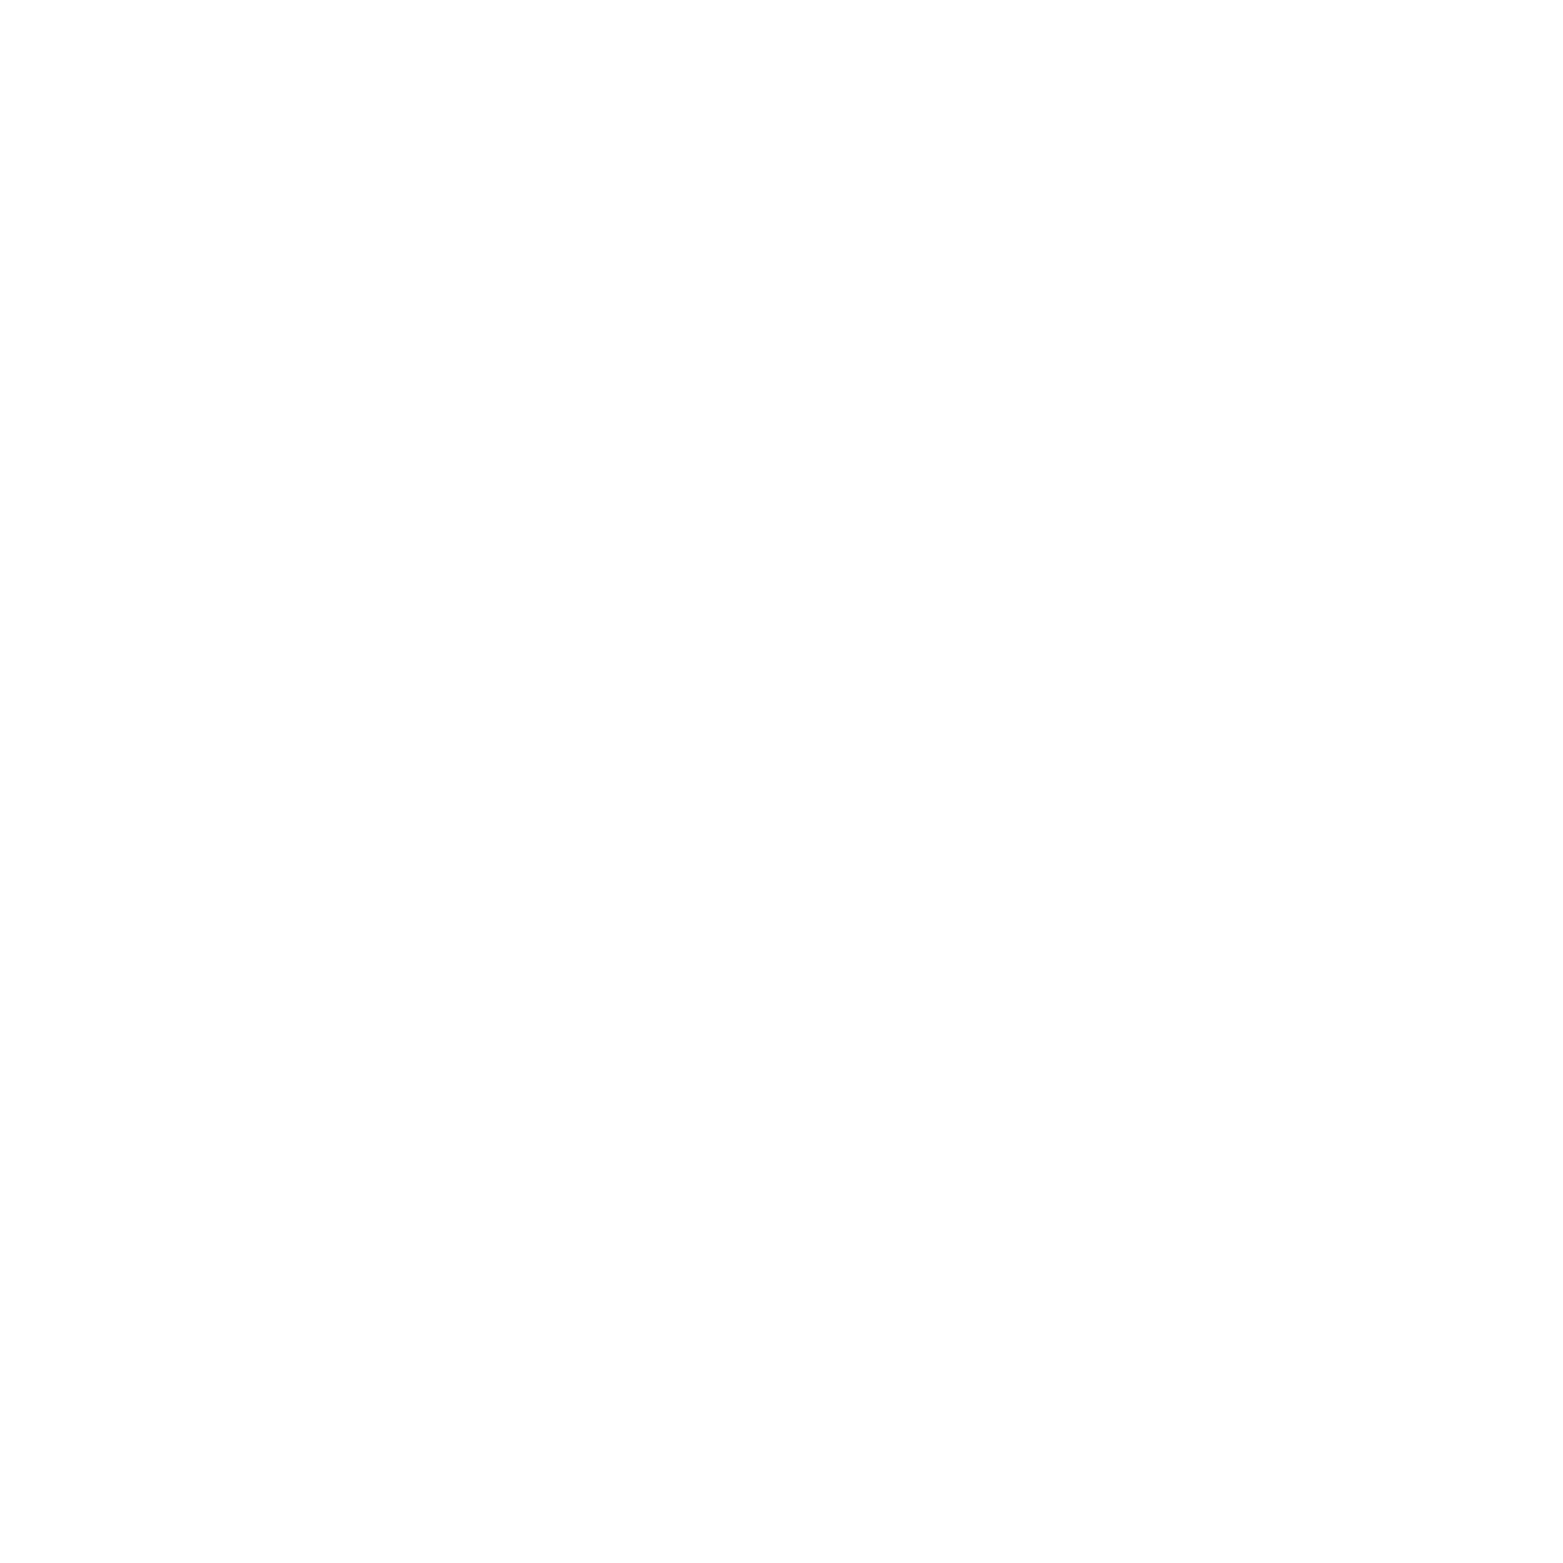 DMT Facilities